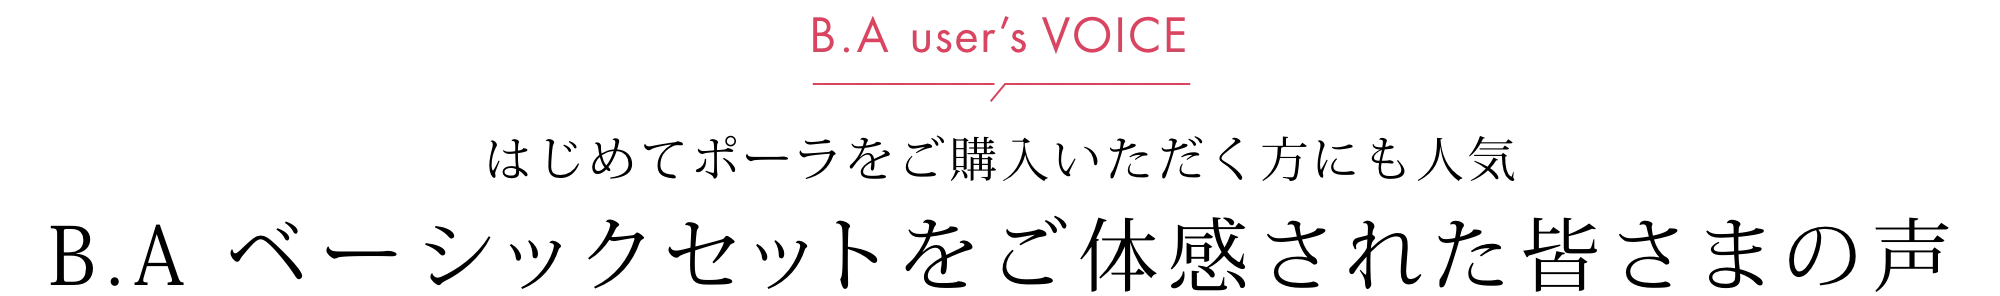 B.A user's voice